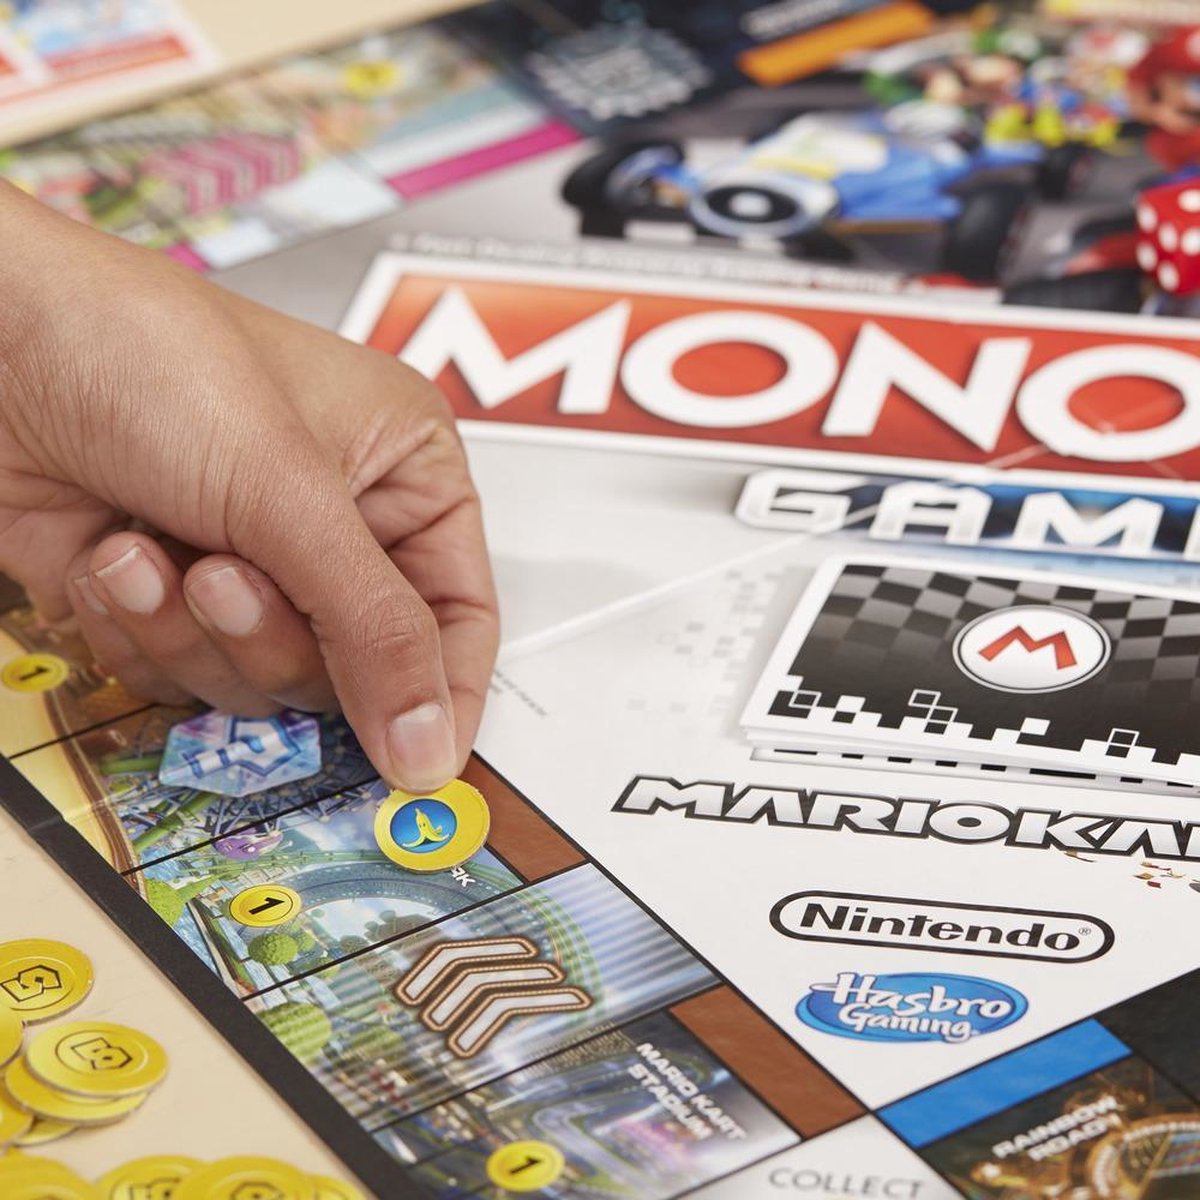 Monopoly Gamer - Mario Kart - Ensemble de personnage